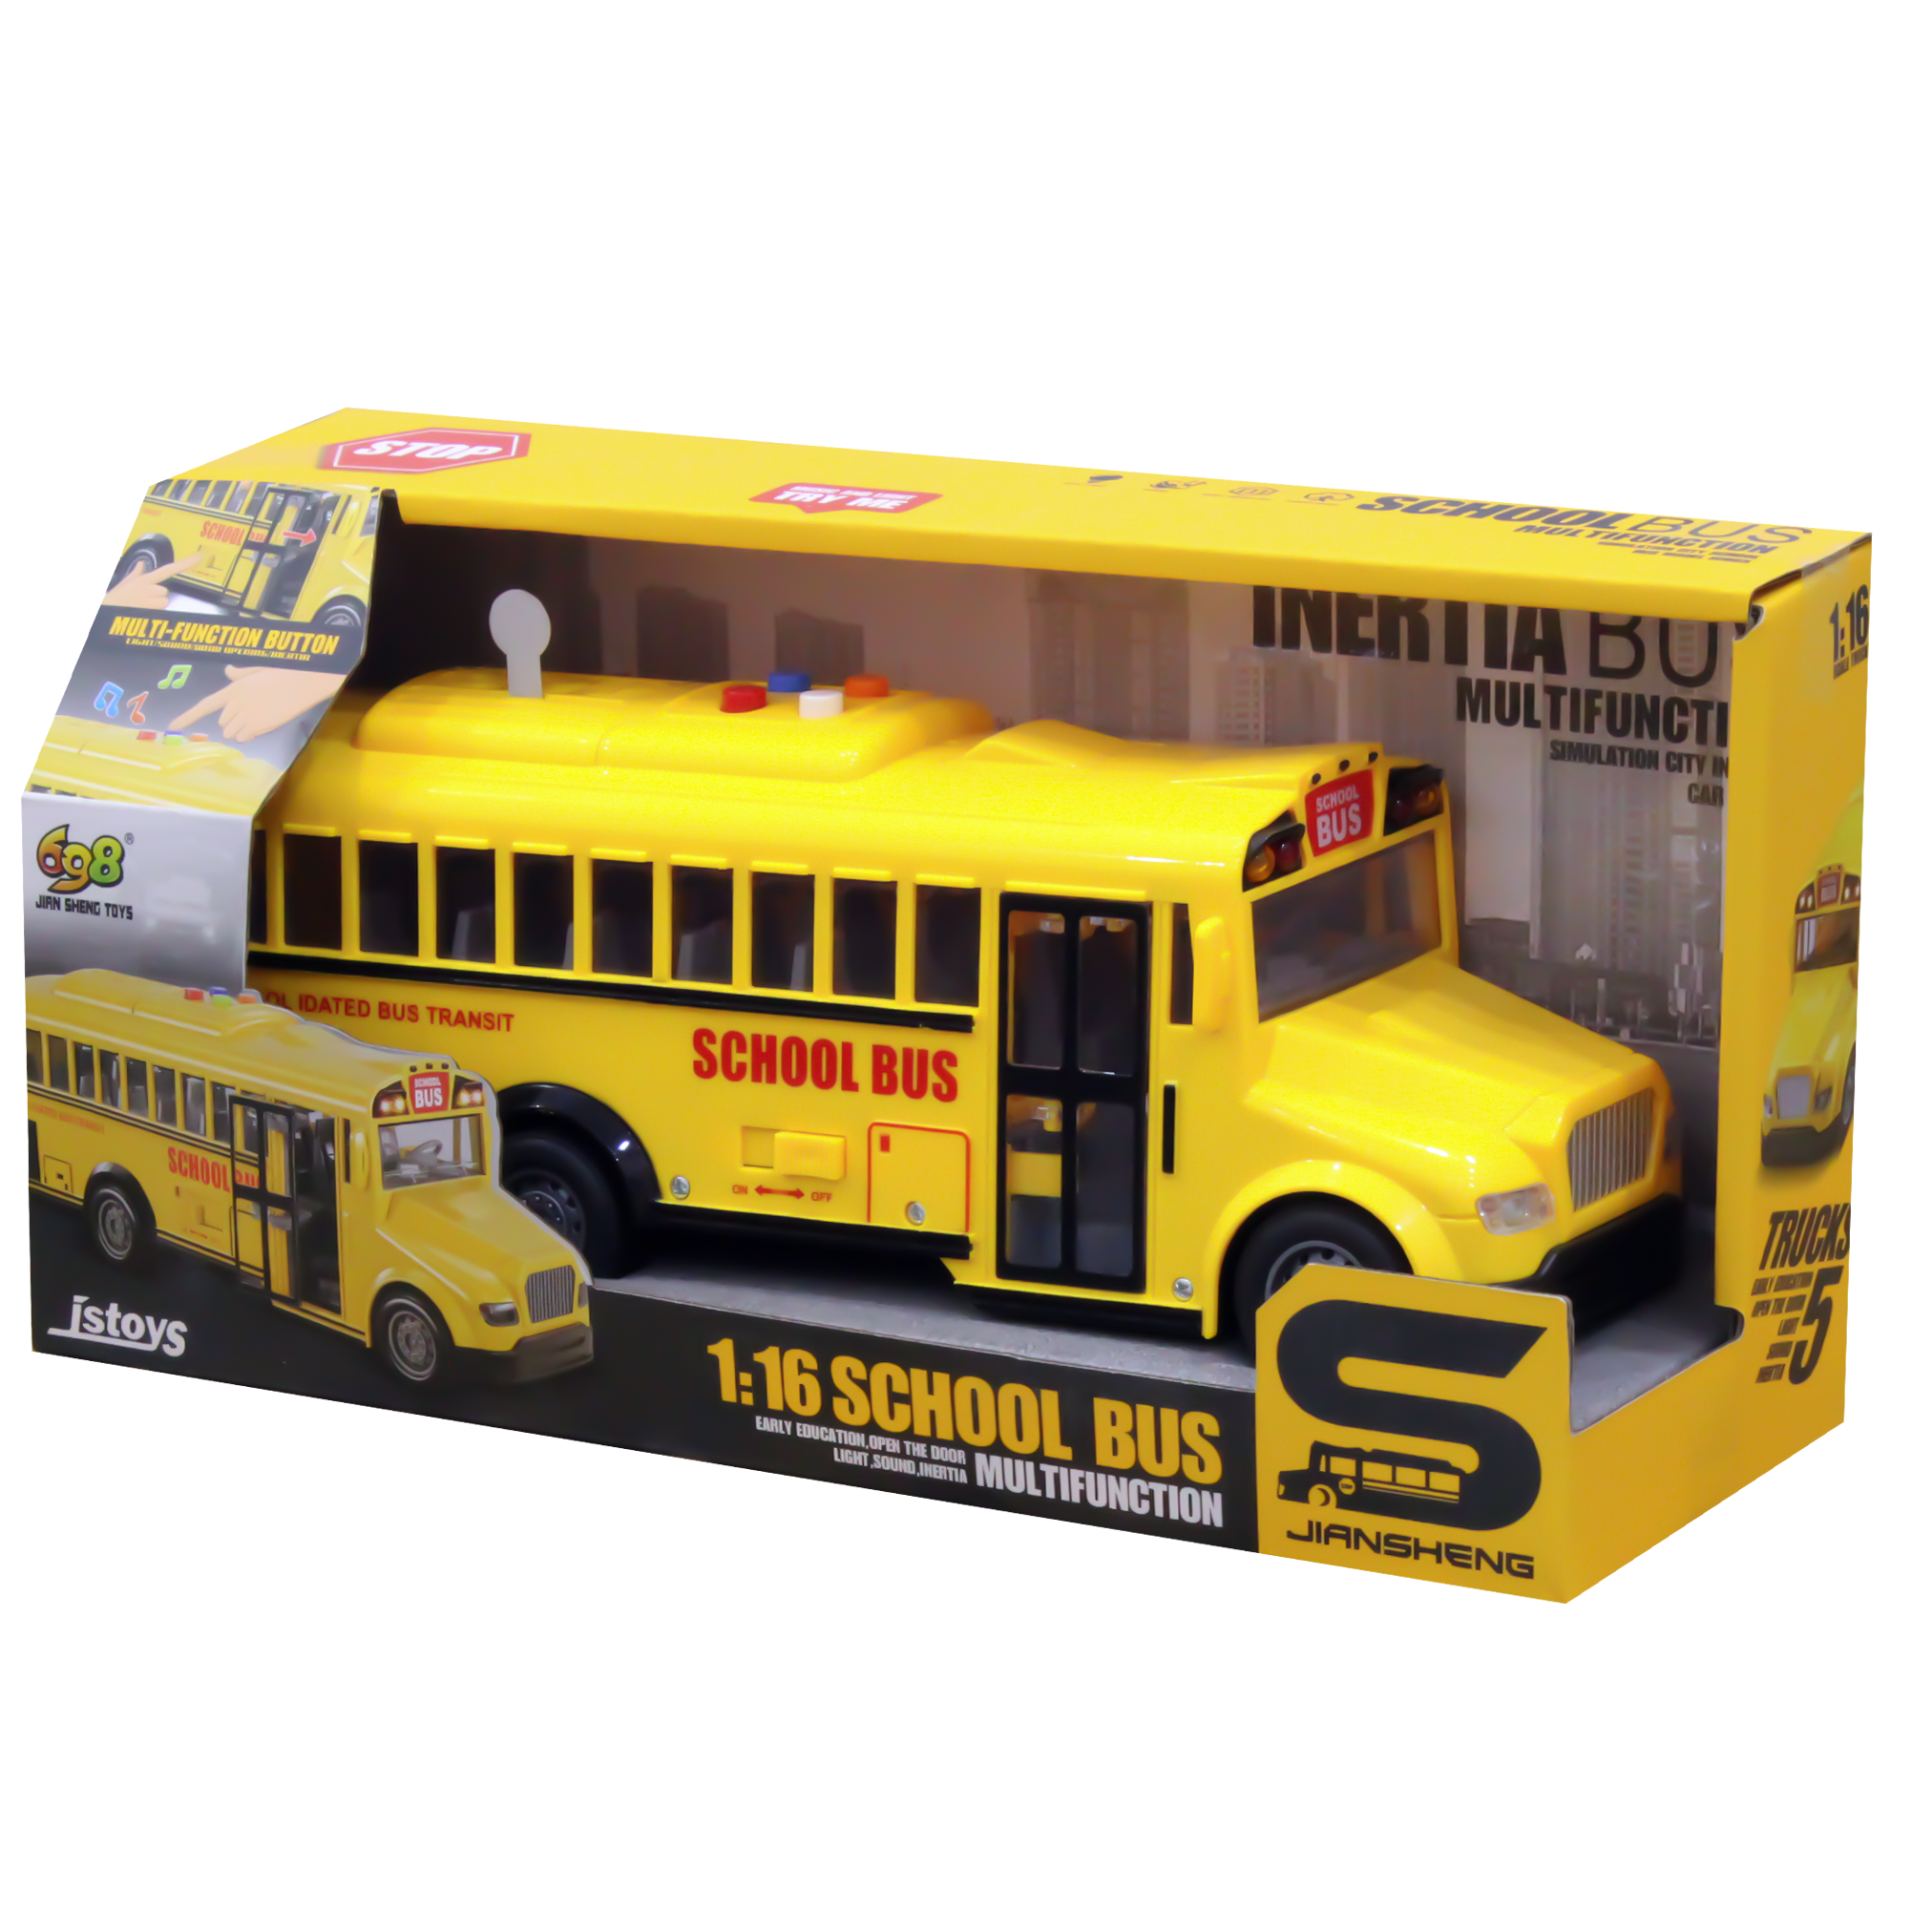 Jstoys 1:16 School Bus Multifunction Simulation City School Bus Model series